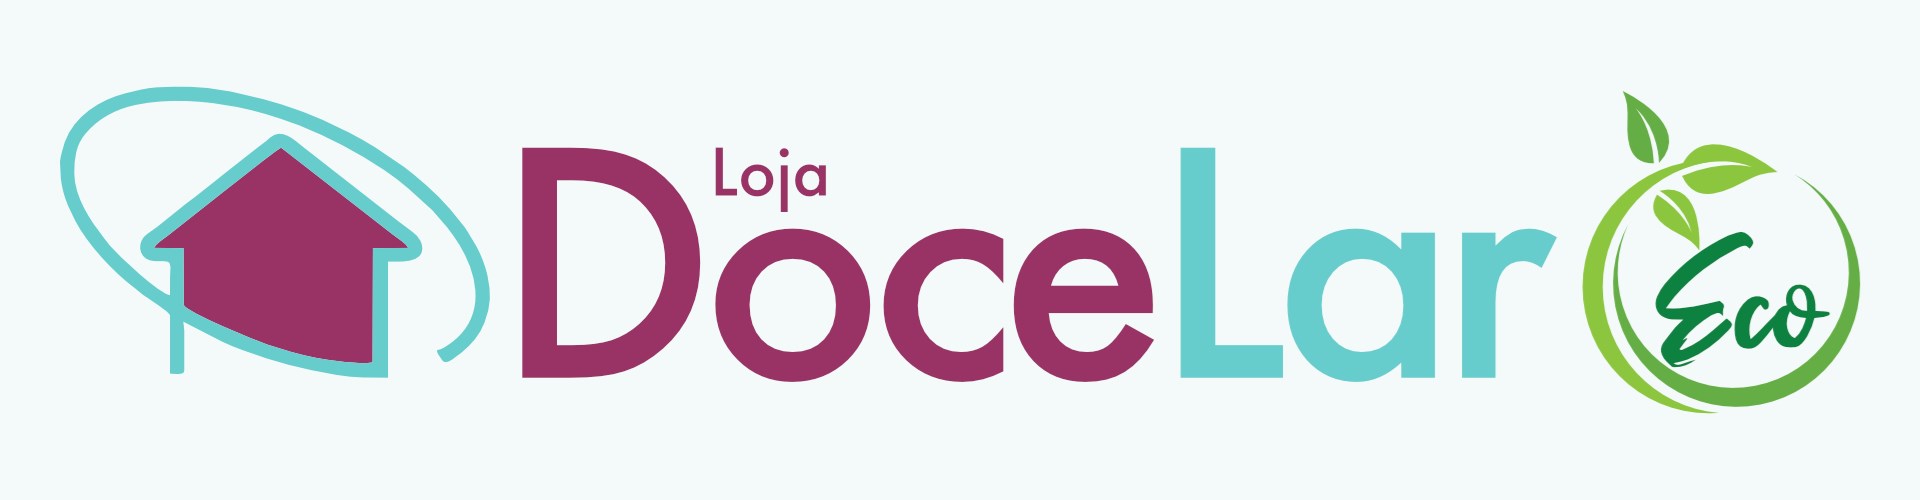 Loja DoceLar Eco 2 - Hotsite Logo